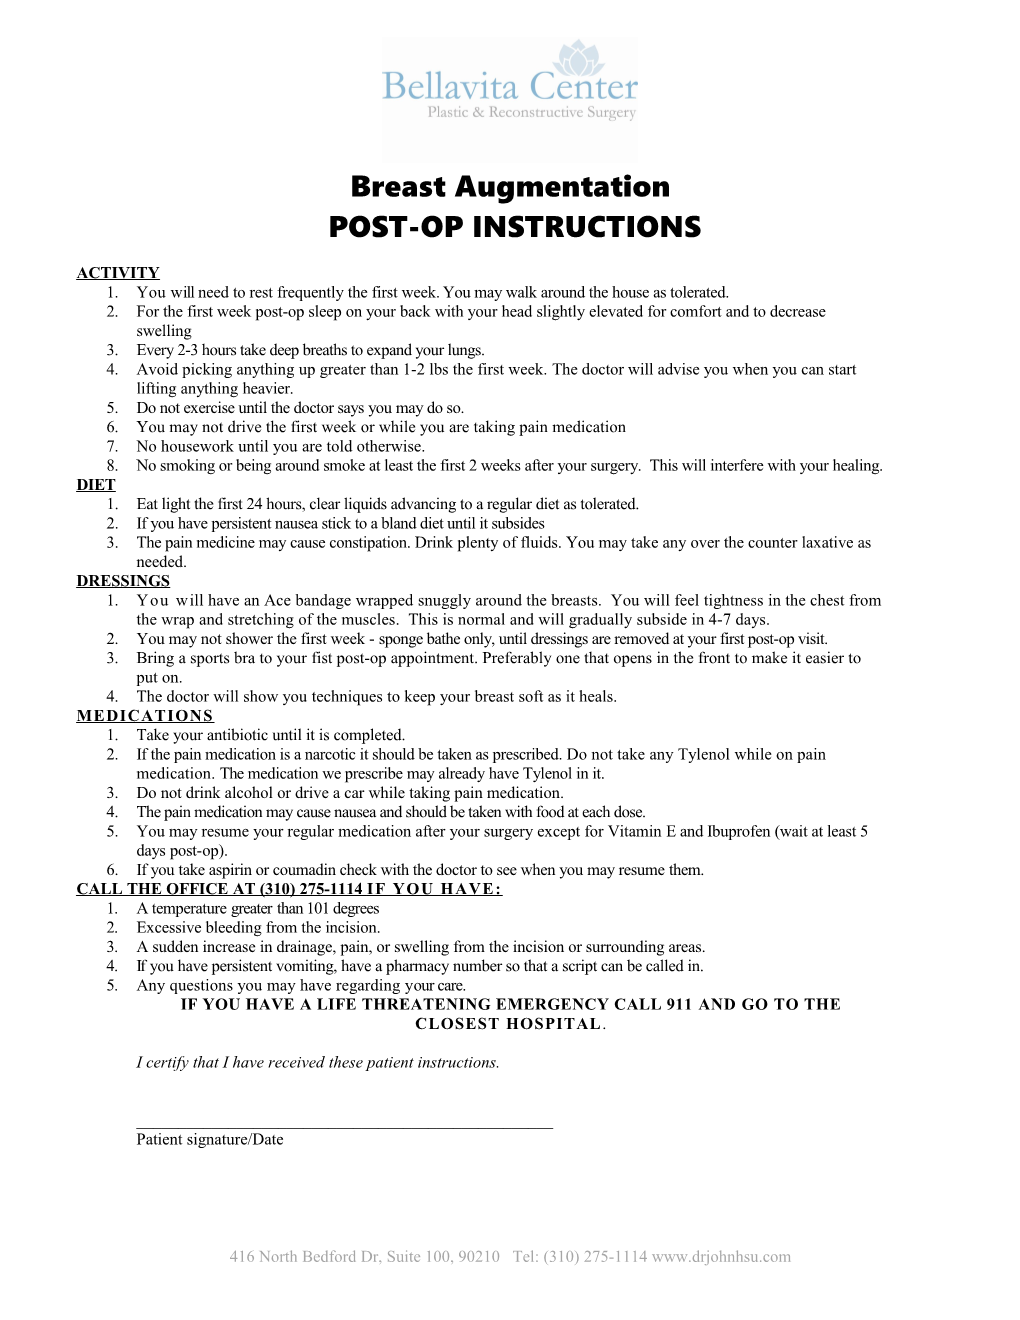 Breast Augmentation POST-OP INSTRUCTIONS